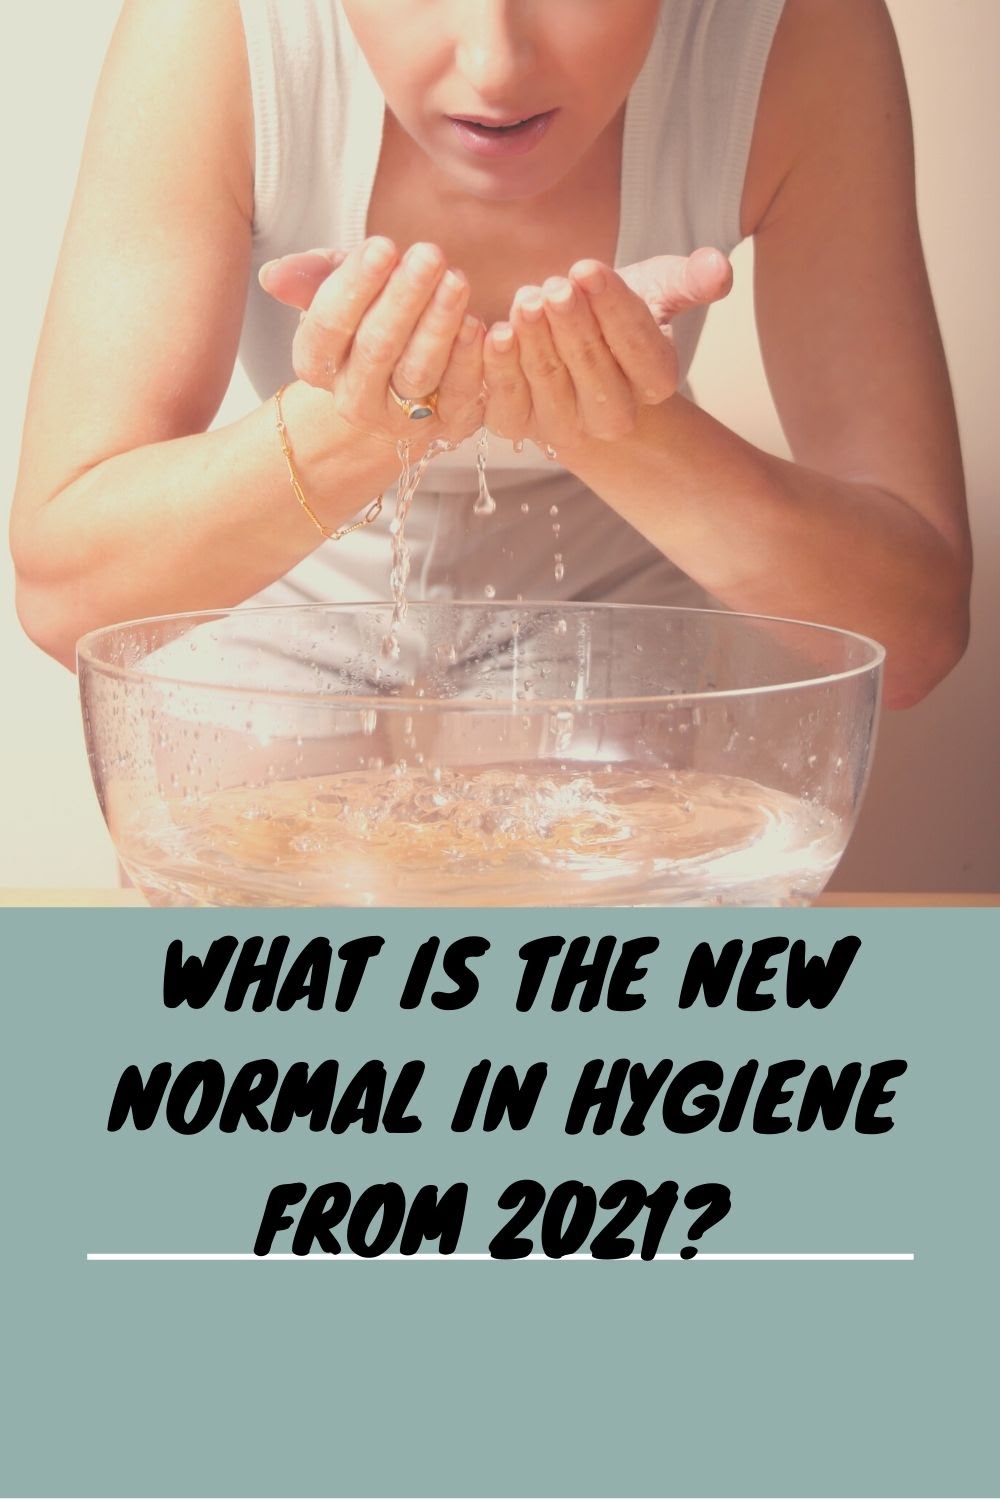 New Normal in Hygiene